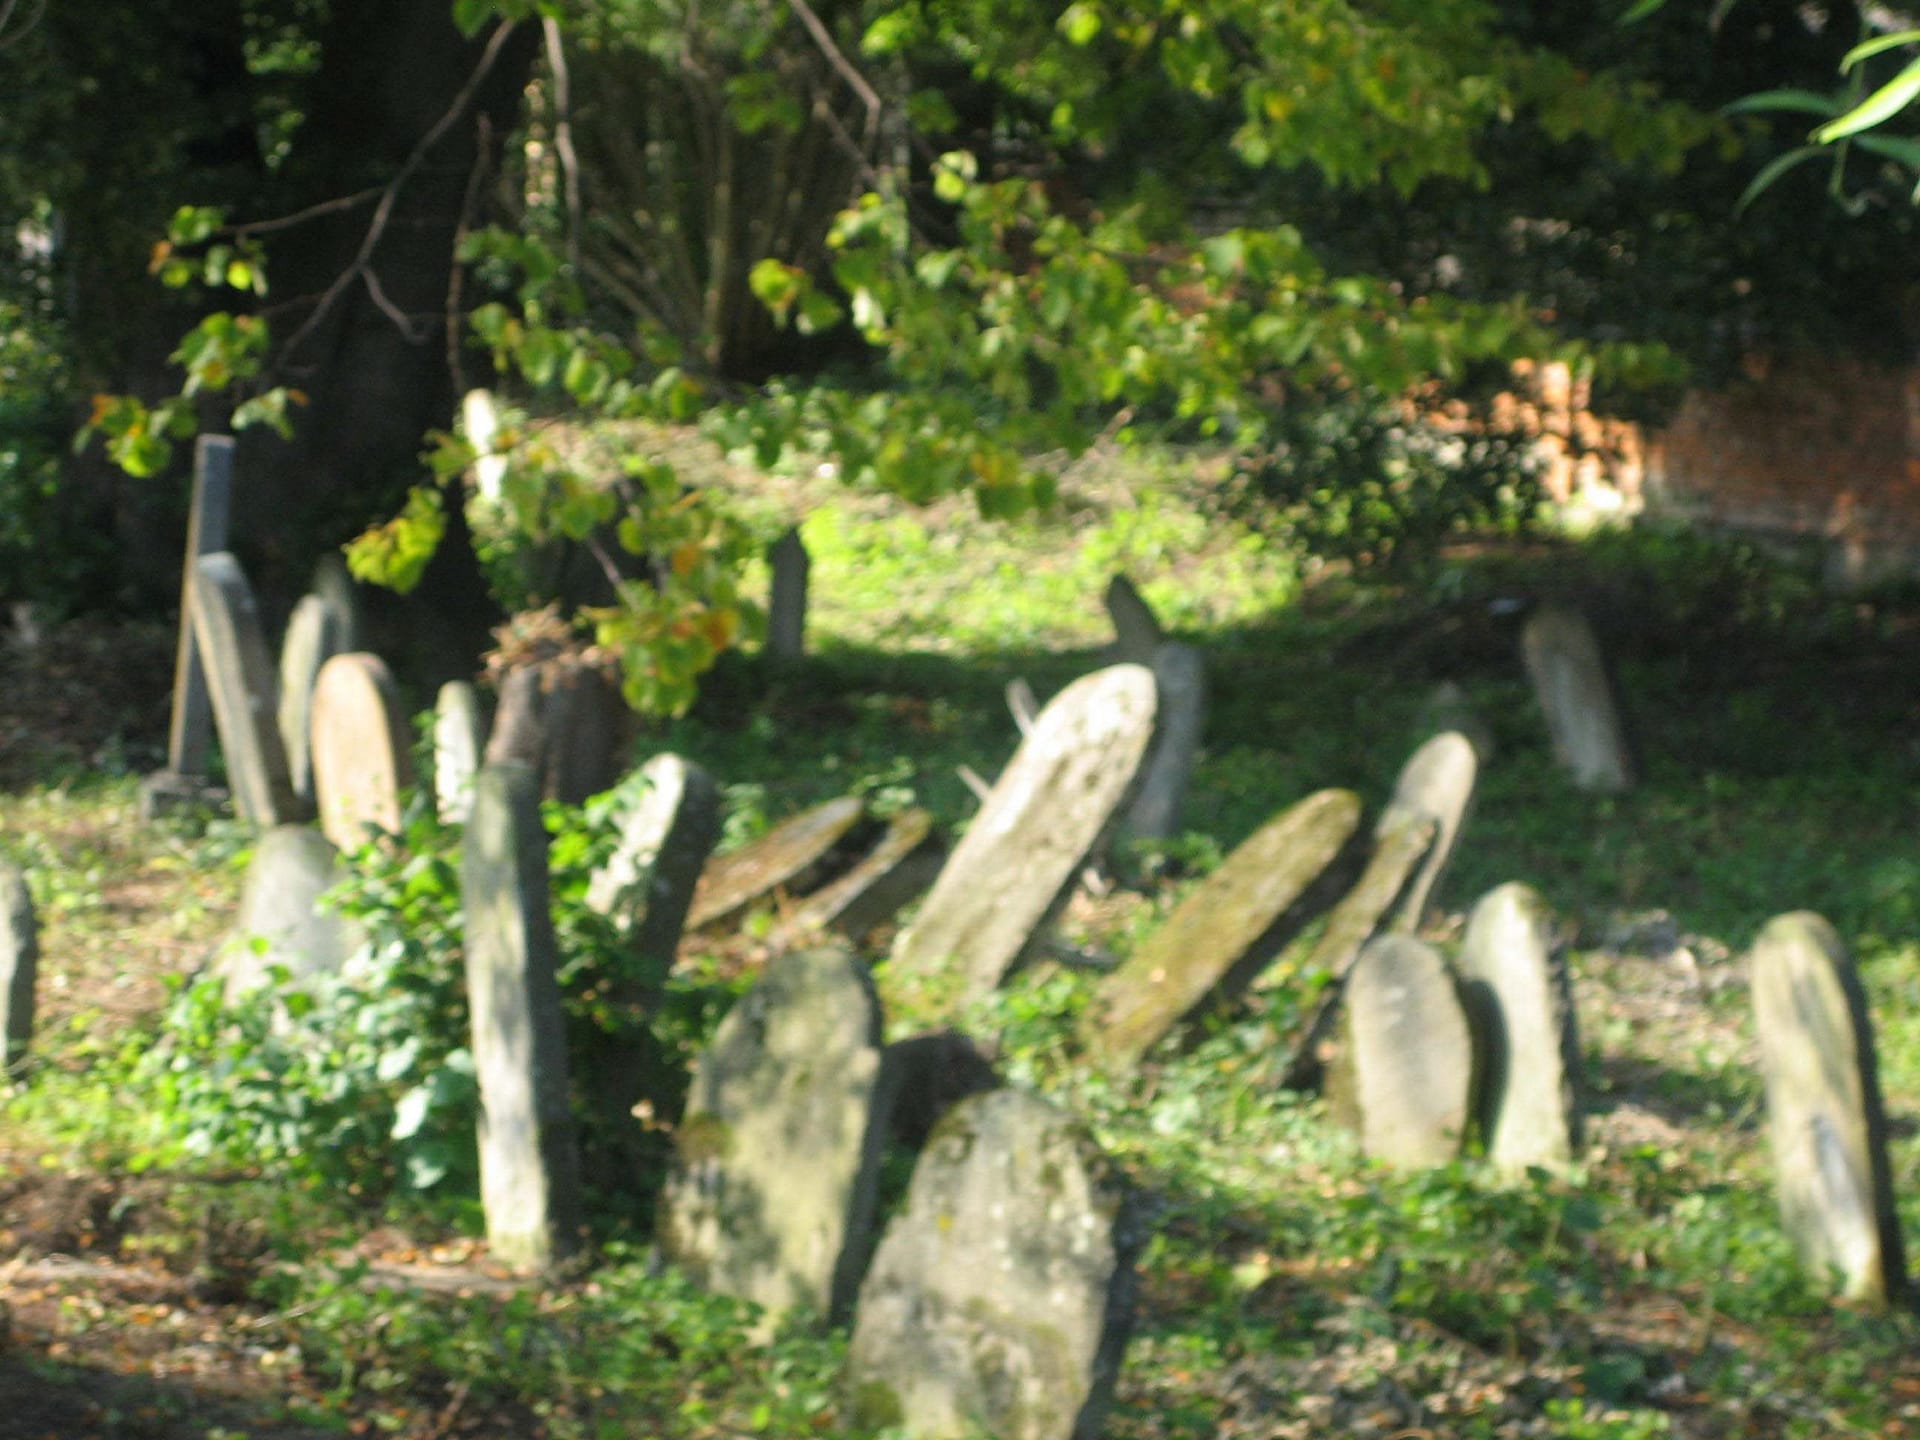 2005 - Cemetery before restoration